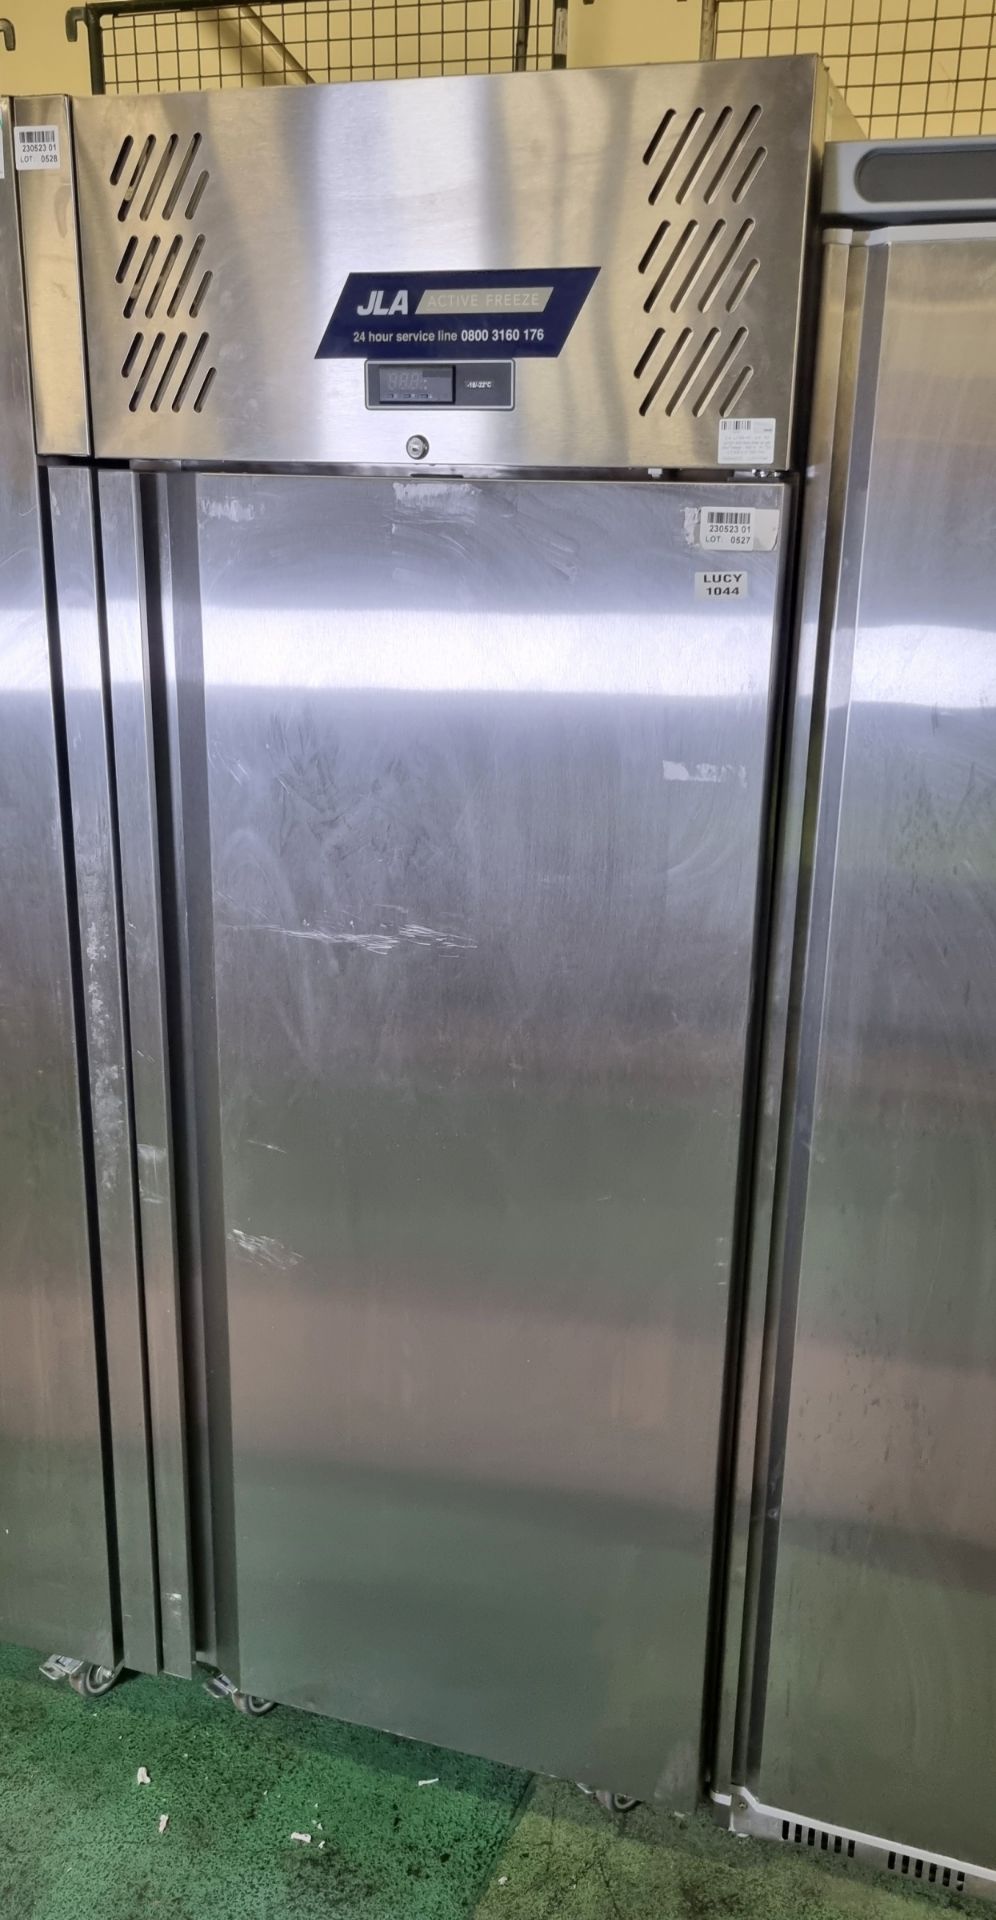 JLA LJ1SA HC - JLA - R2 upright stainless steel single door freezer - 468 ltr - W 730 x D 830 - Image 2 of 4